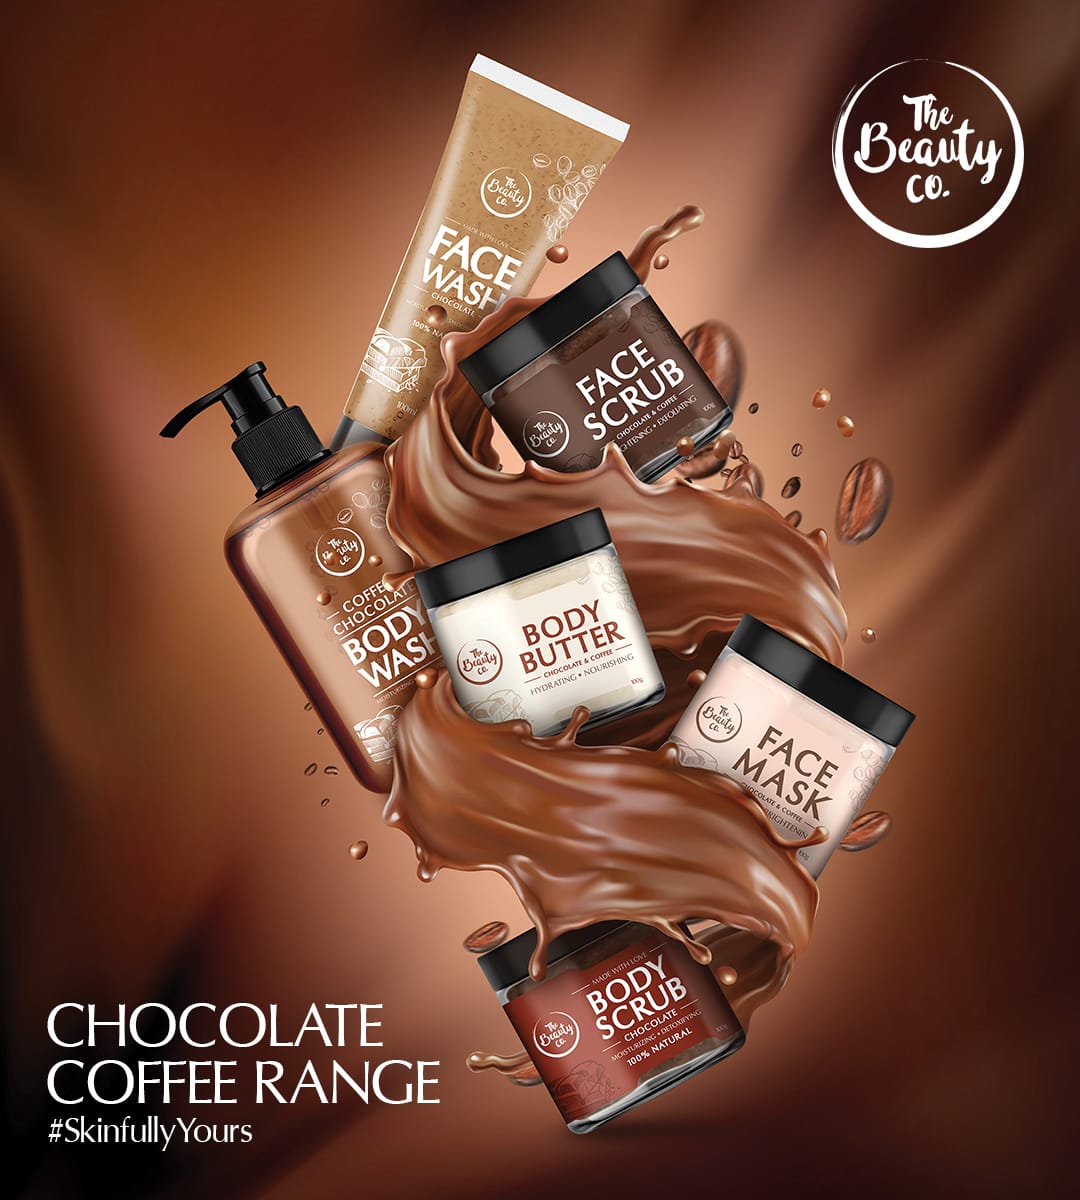 The Beauty Co. - CHOCOLATE COFFEE RANGE #SkinfullyYours